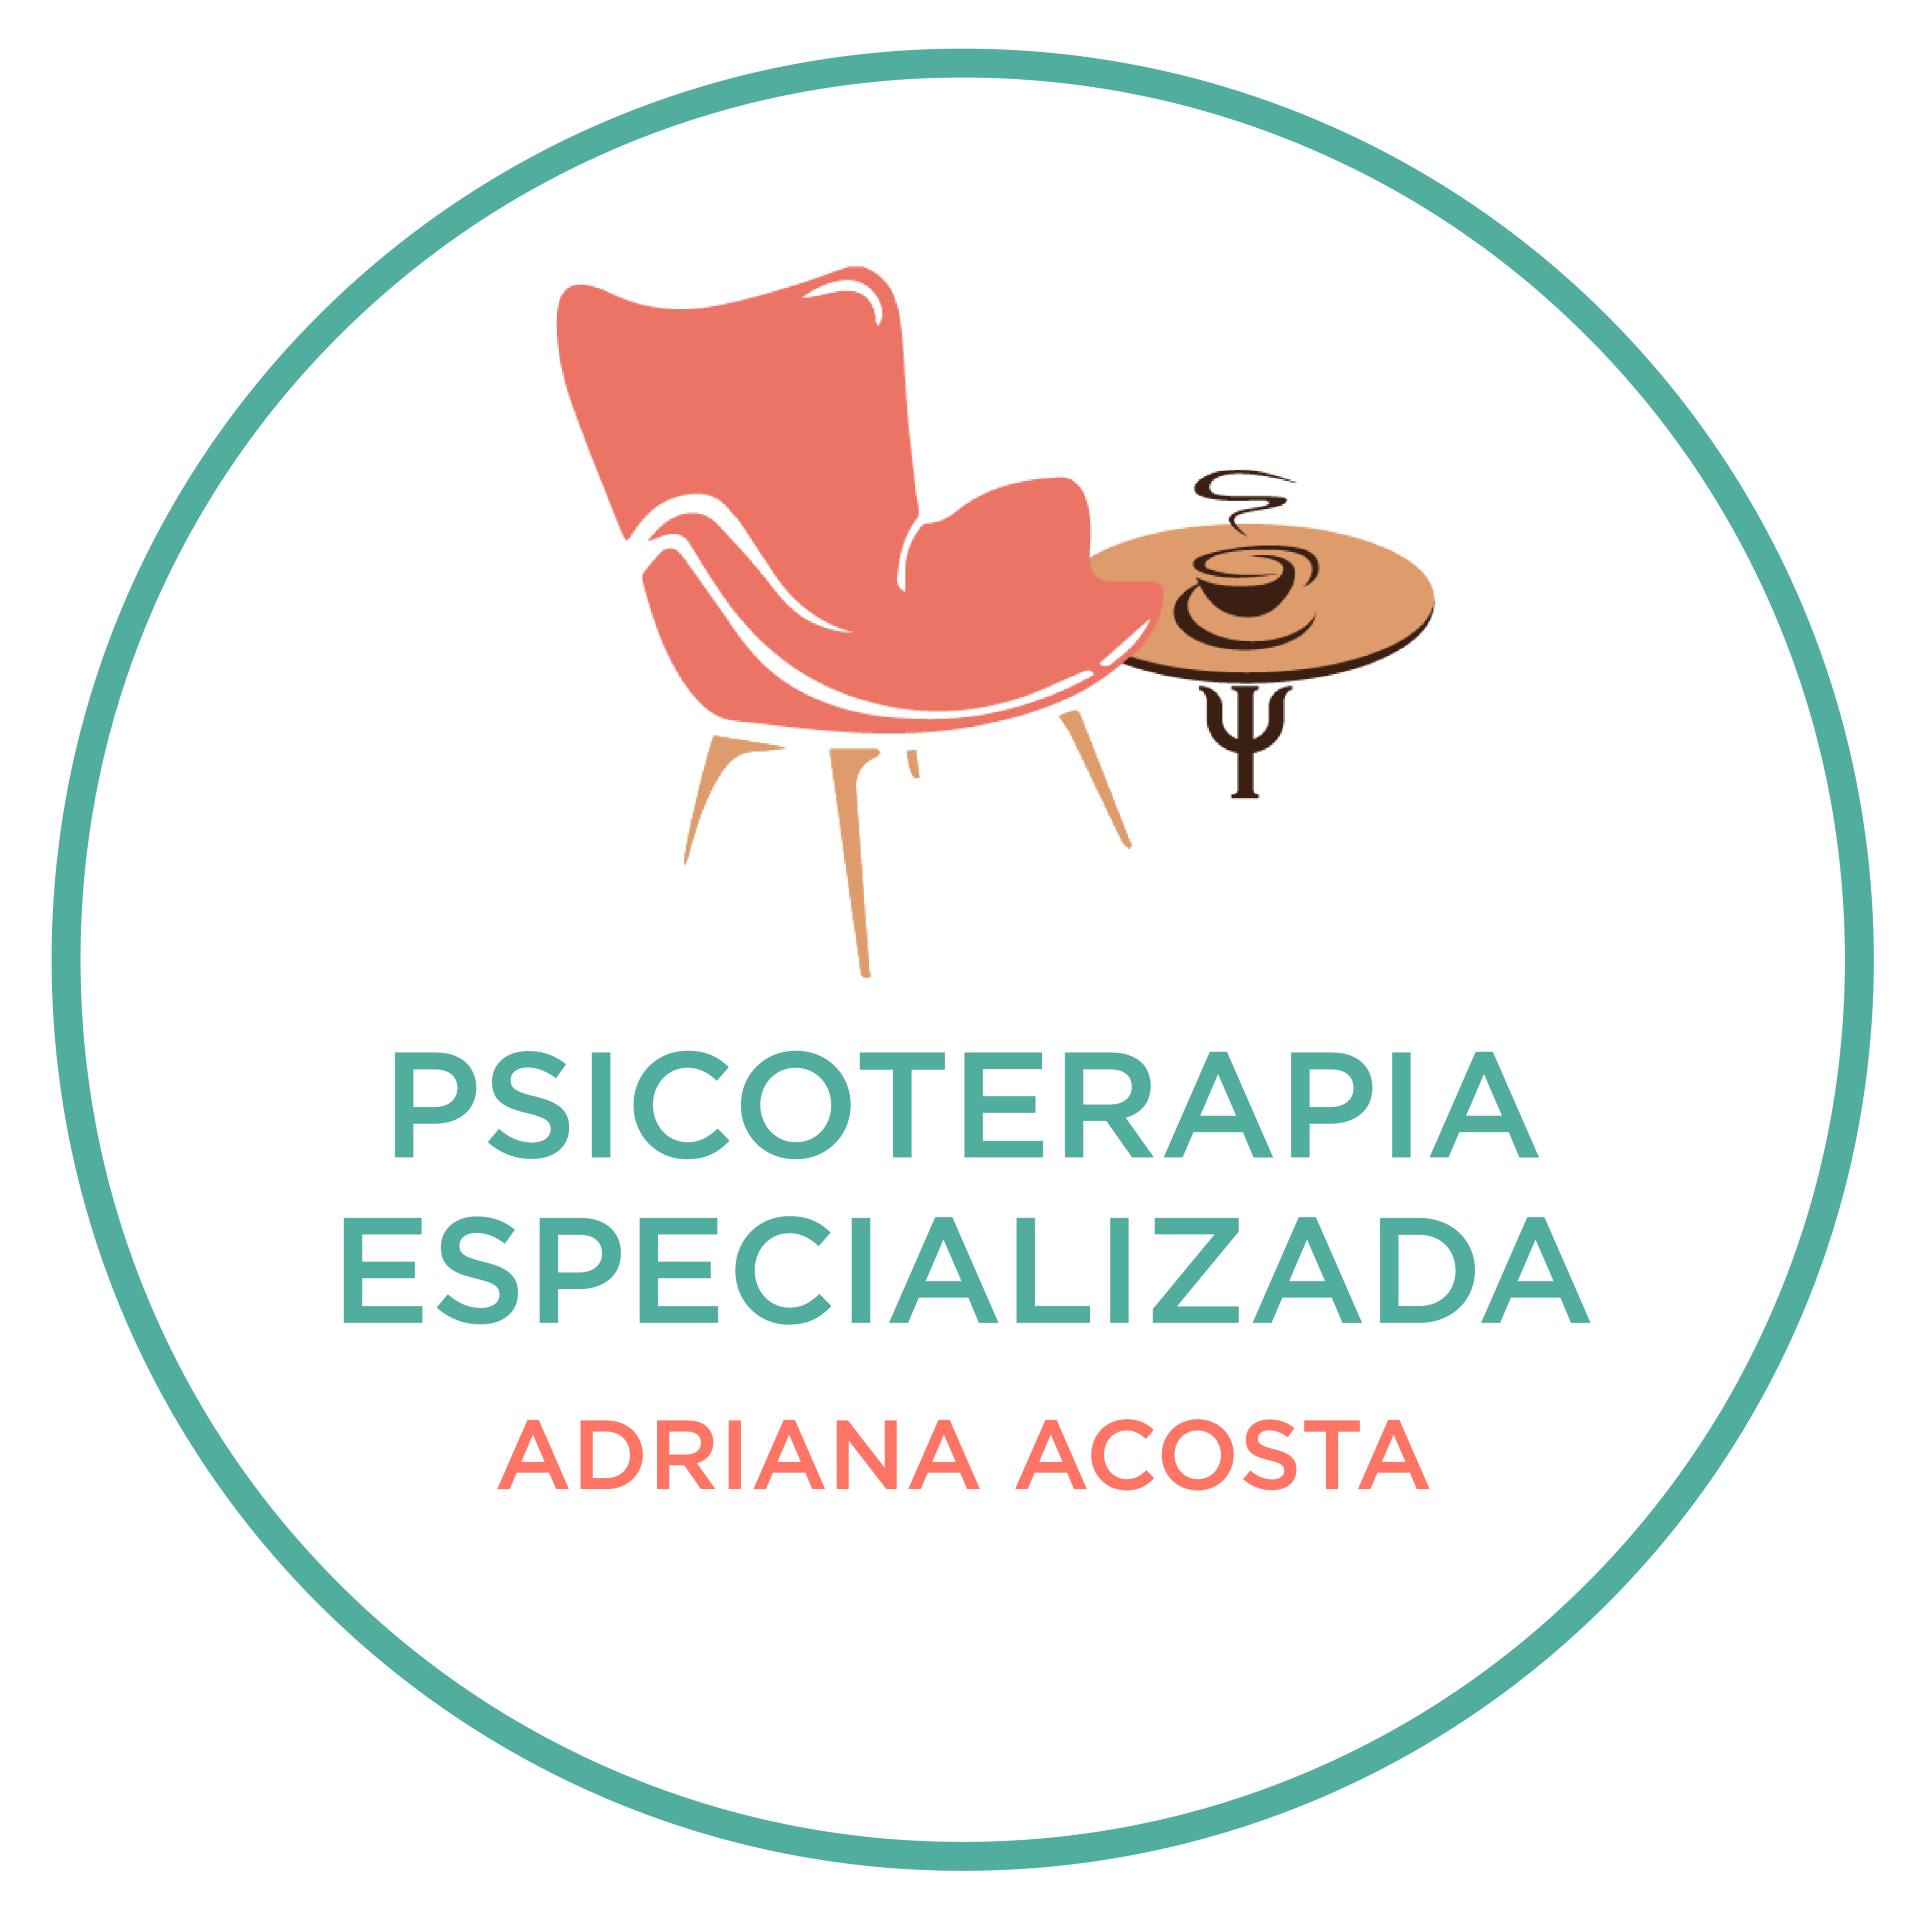 Psicoterapia especializada playa logo